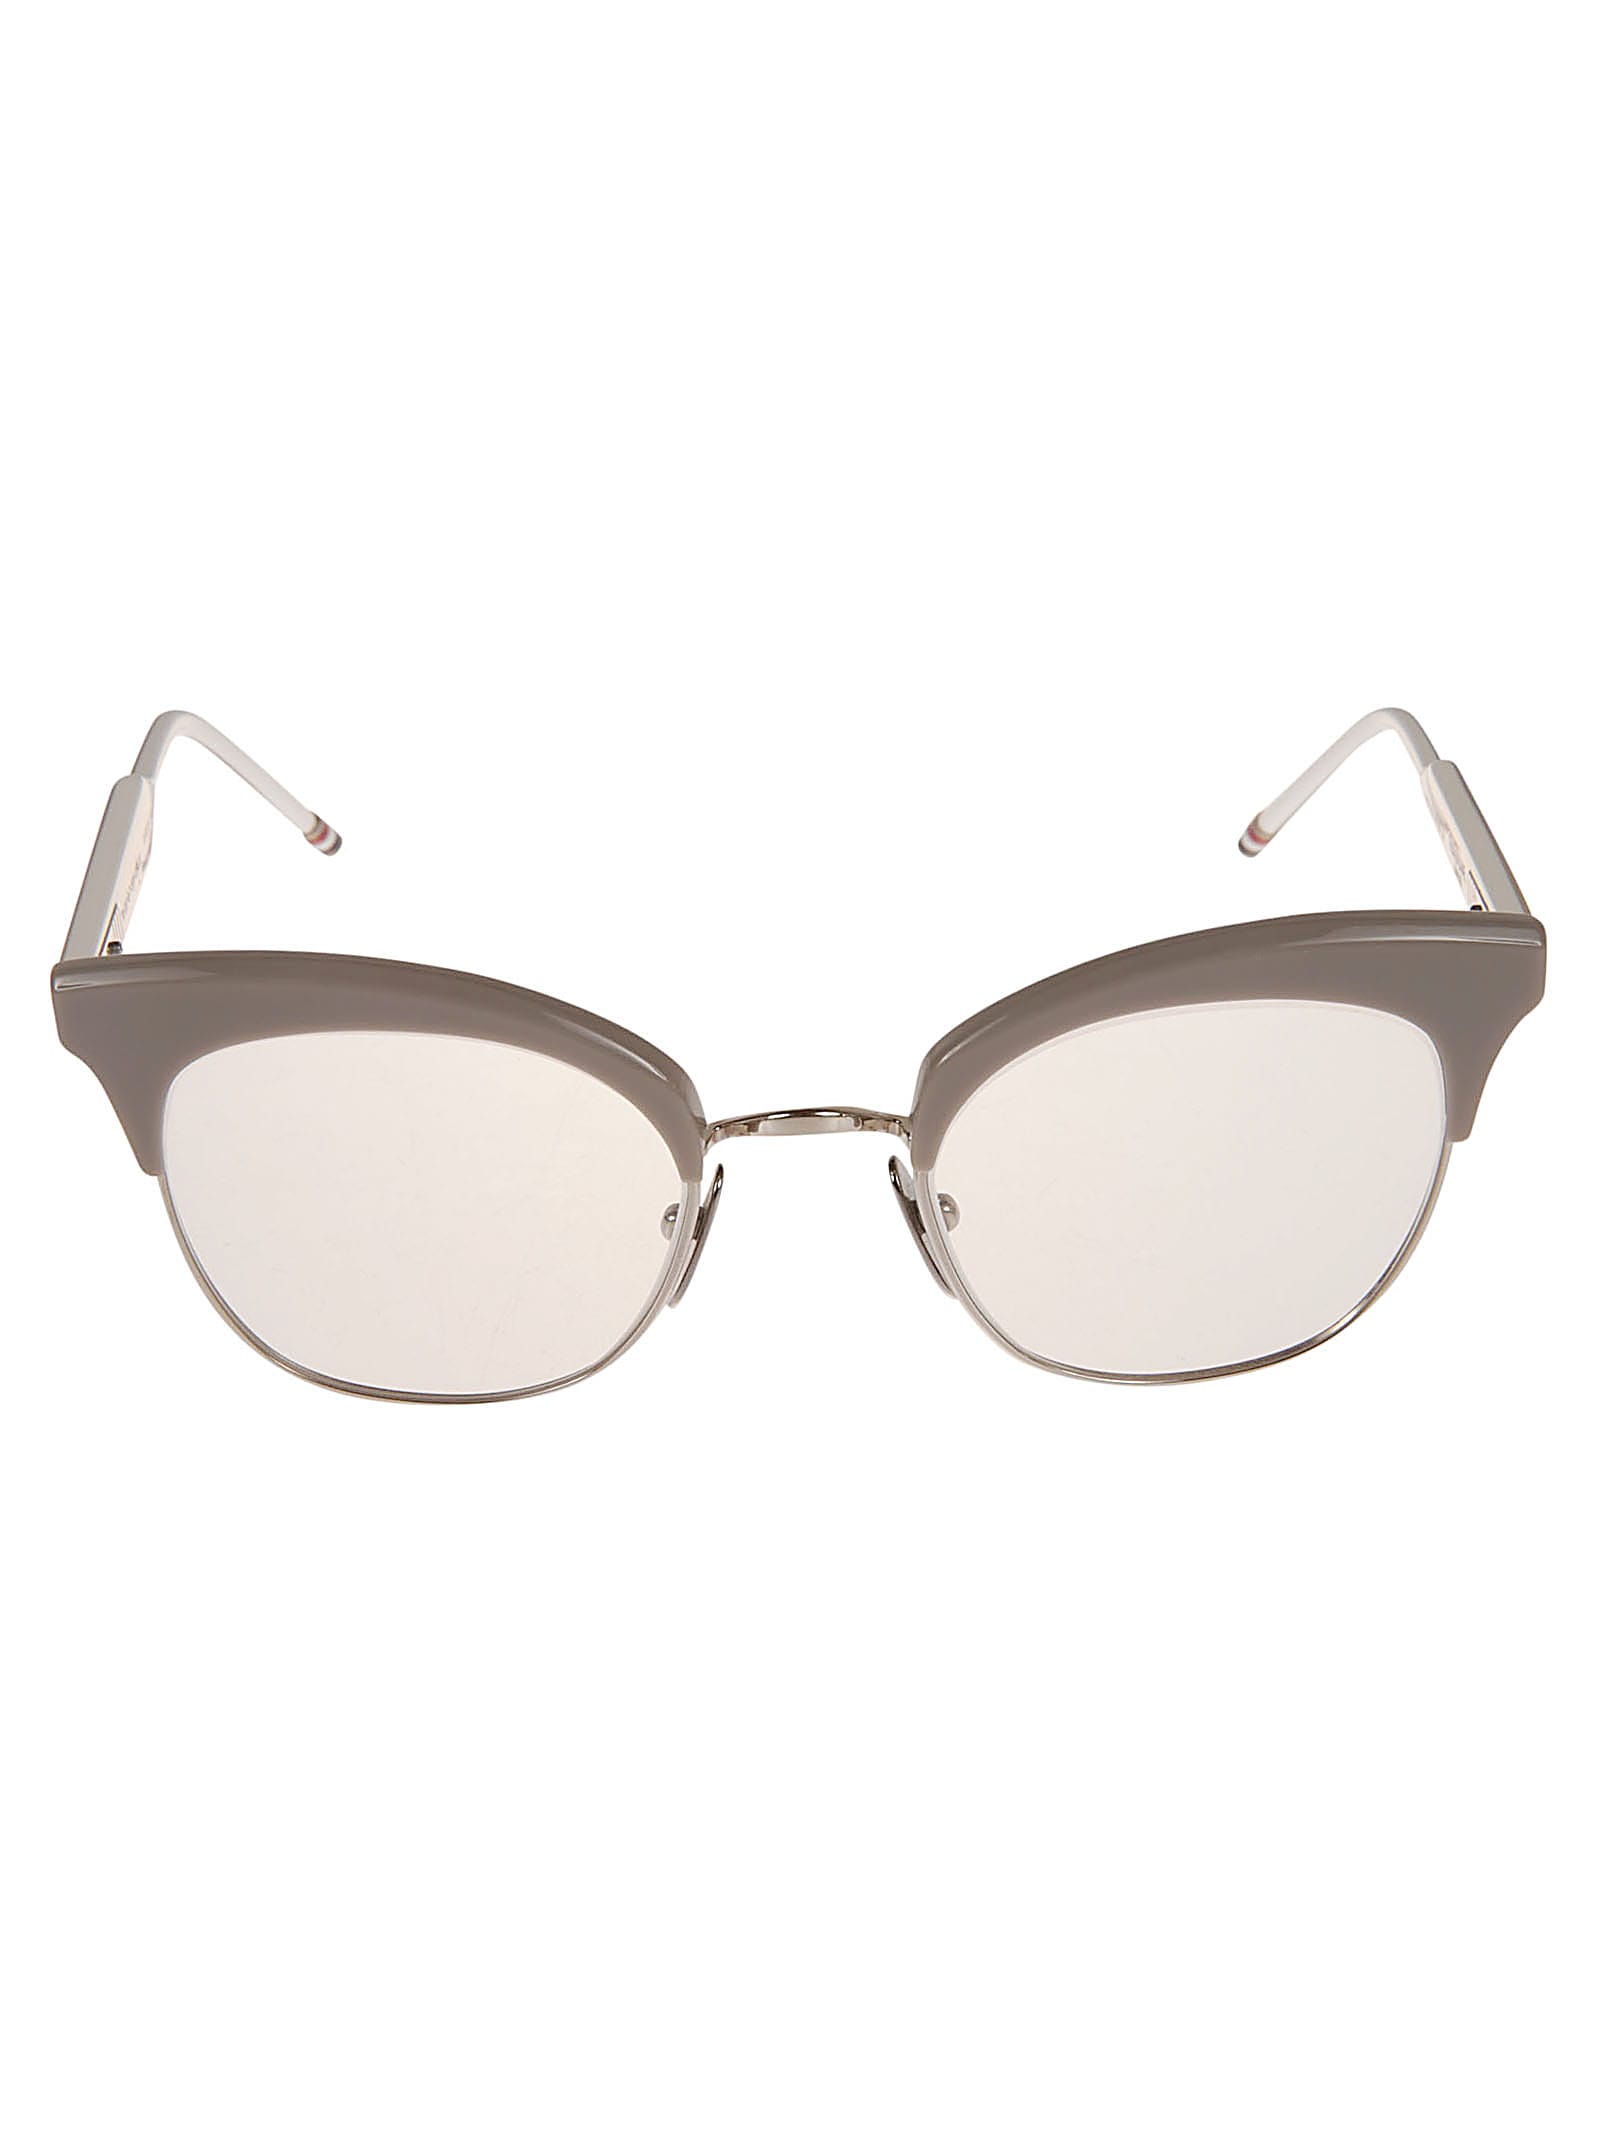 Thom Browne Tb-507 Glasses